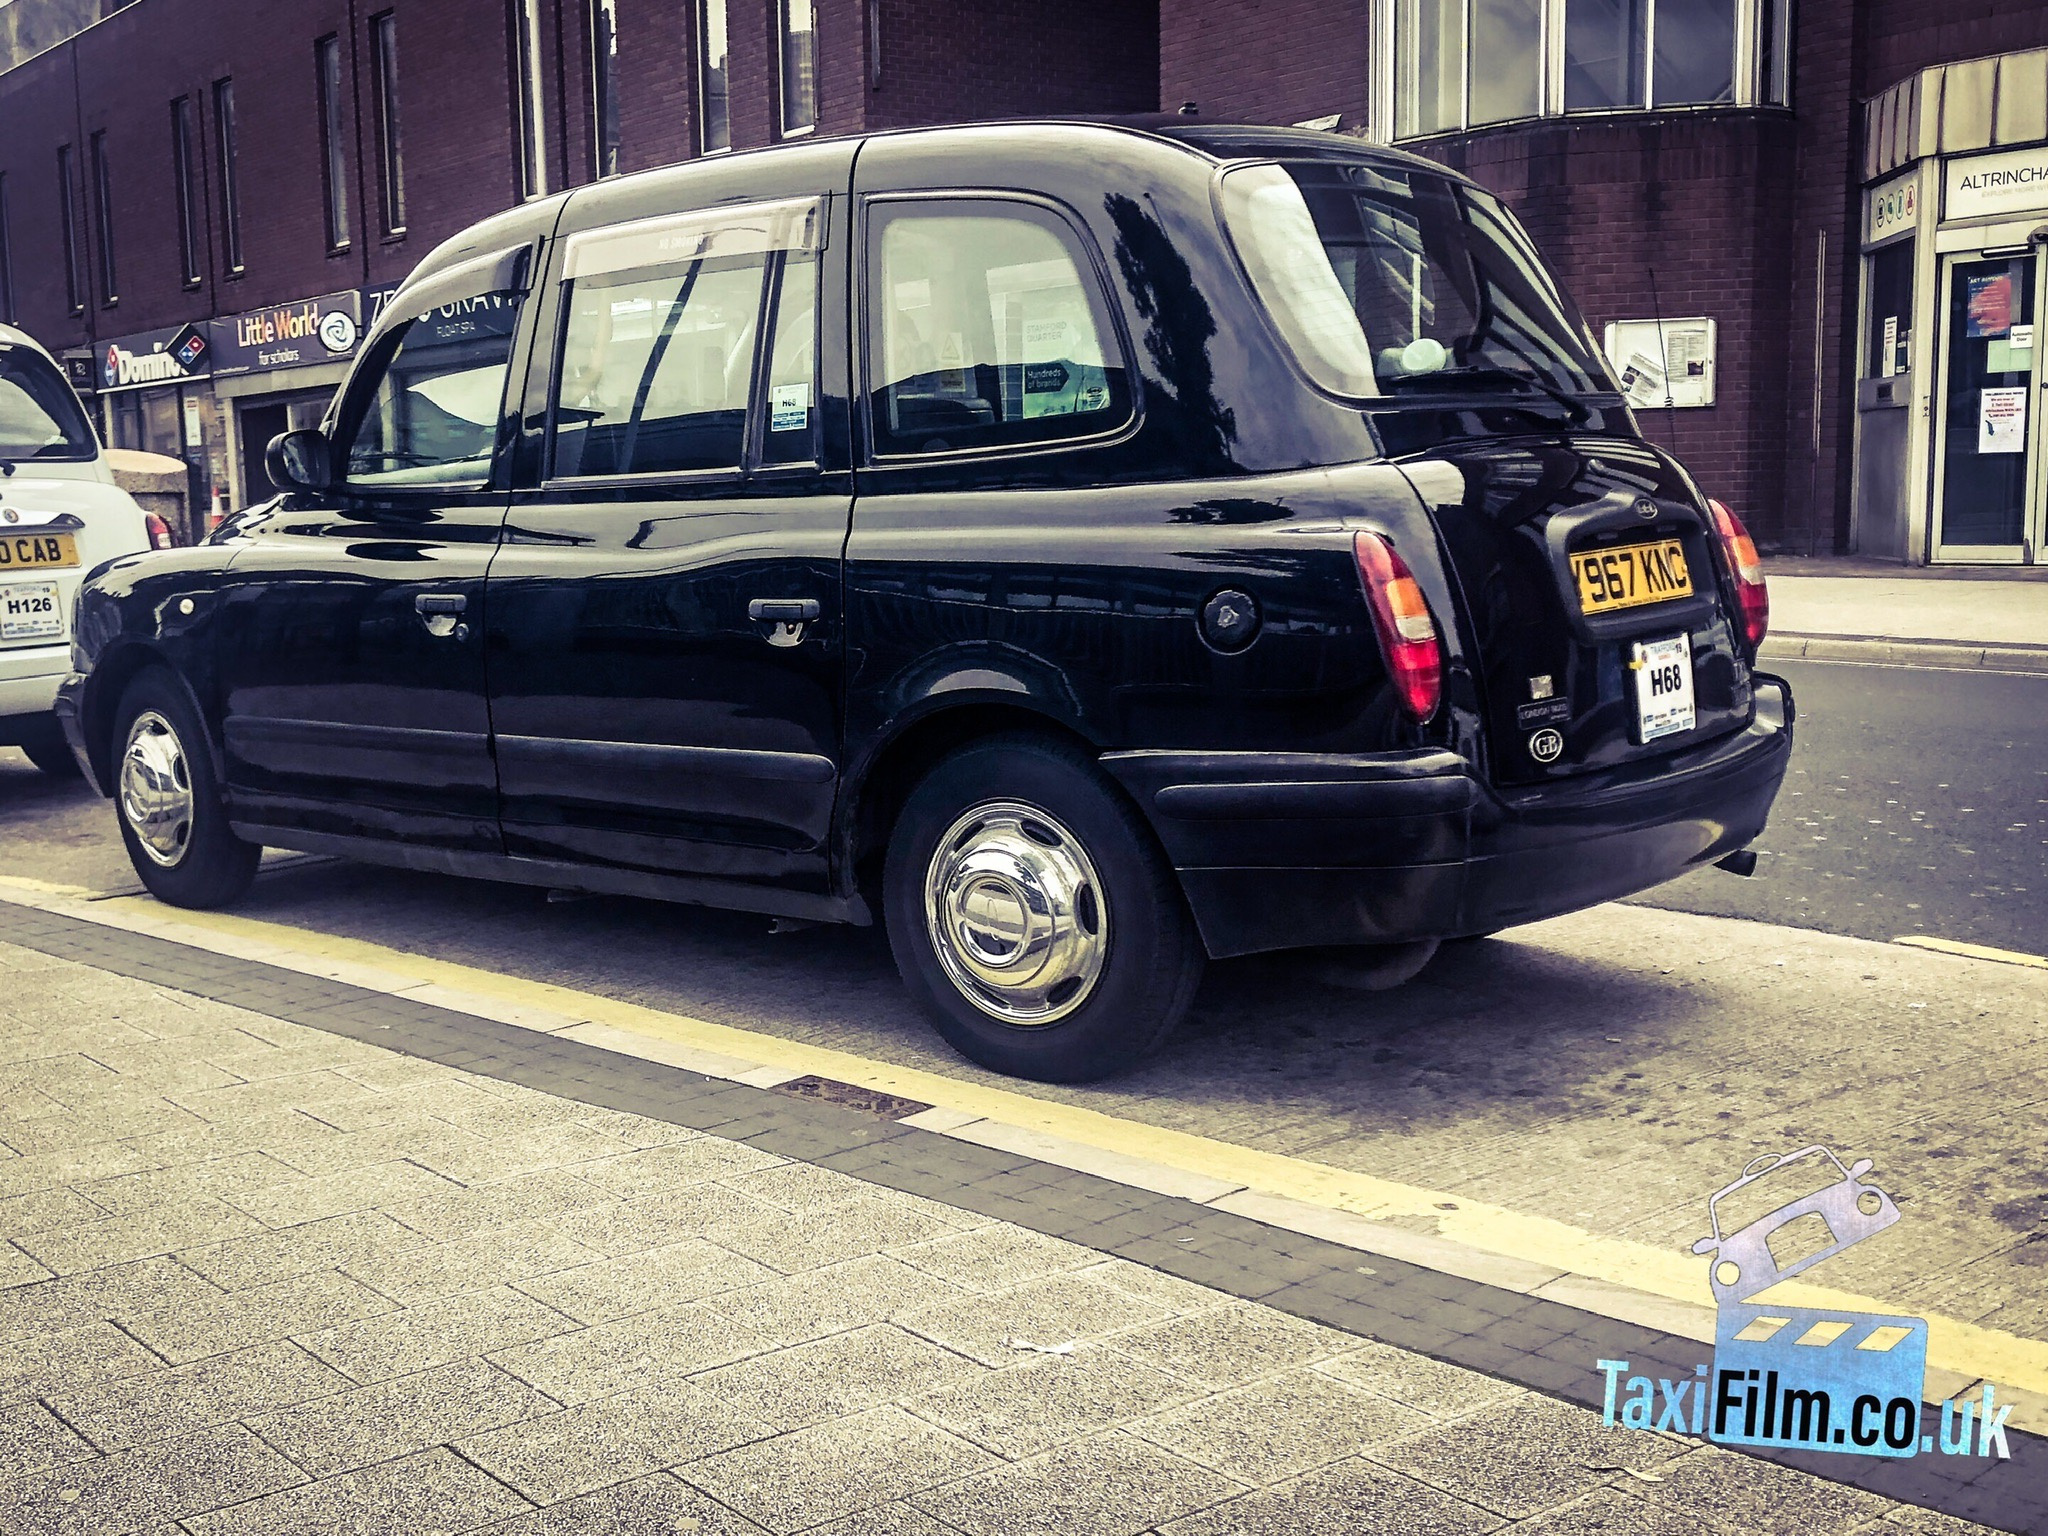 Black Tx1 Taxi, 2001, Manchester
ref M0005